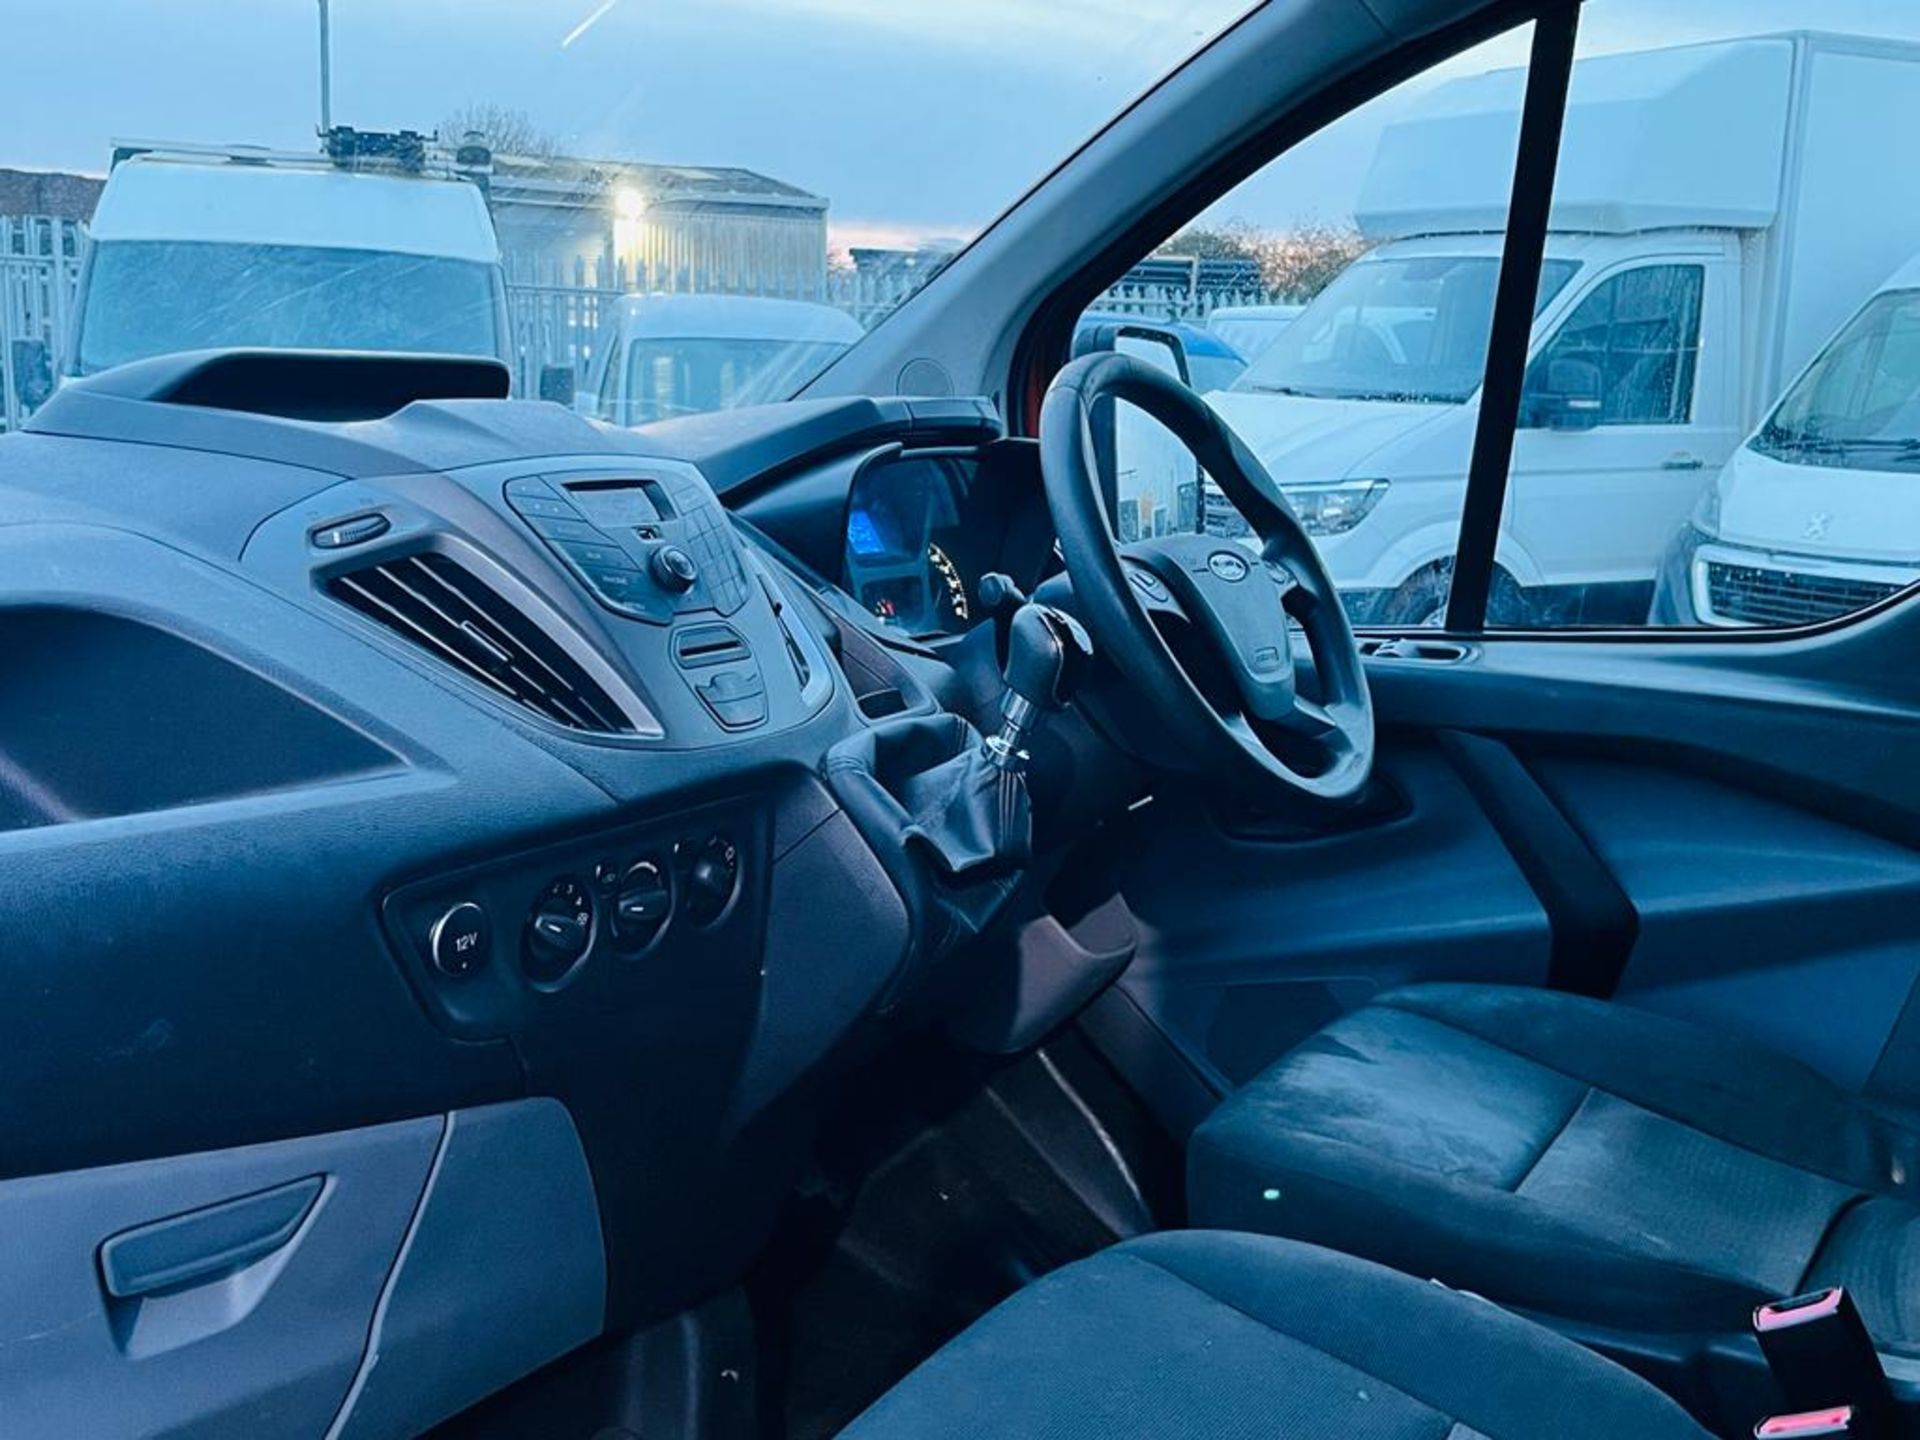 Ford Transit Custom 2.2 TDCI 100 290 LWB H3 2015 '65 Reg' Panel Van - Van Vault - Image 26 of 30